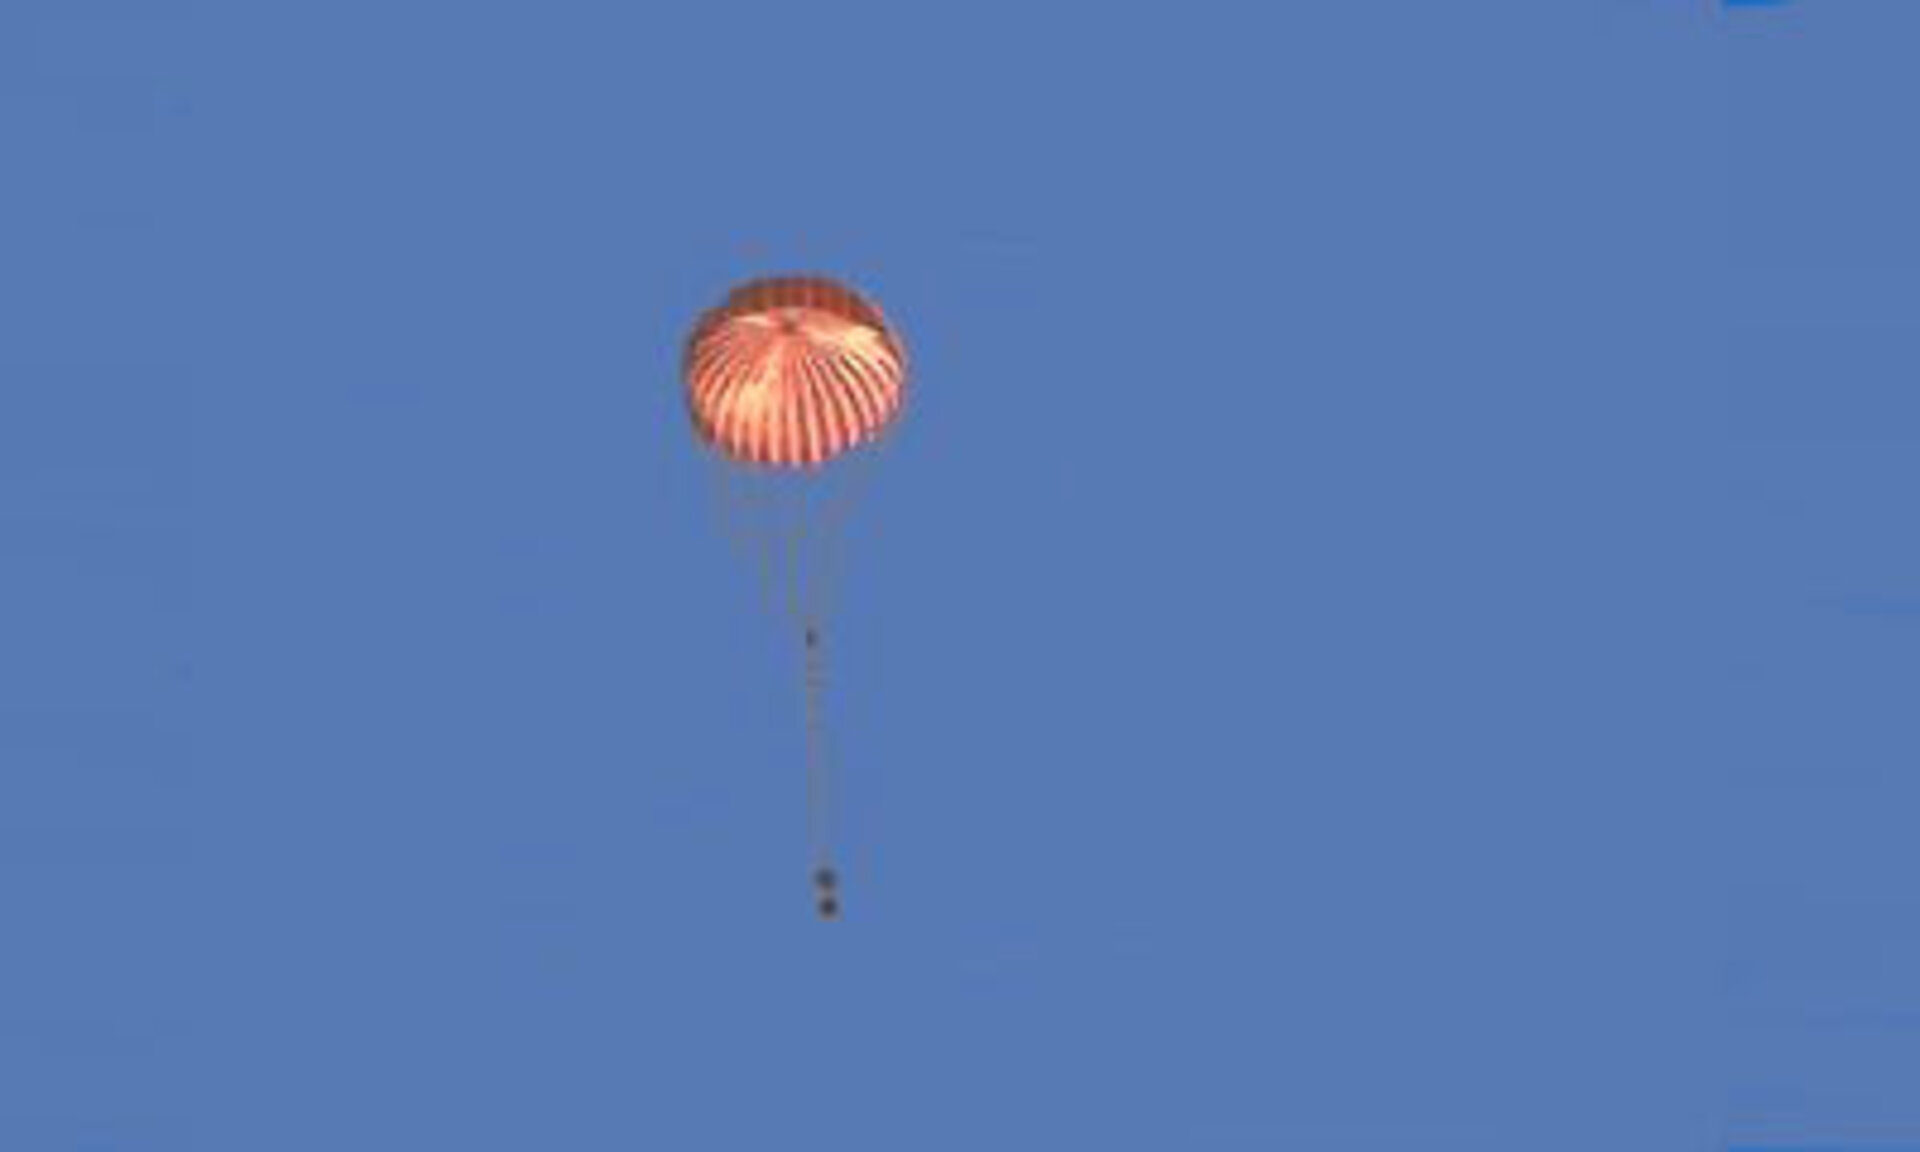 Landing of the balloon